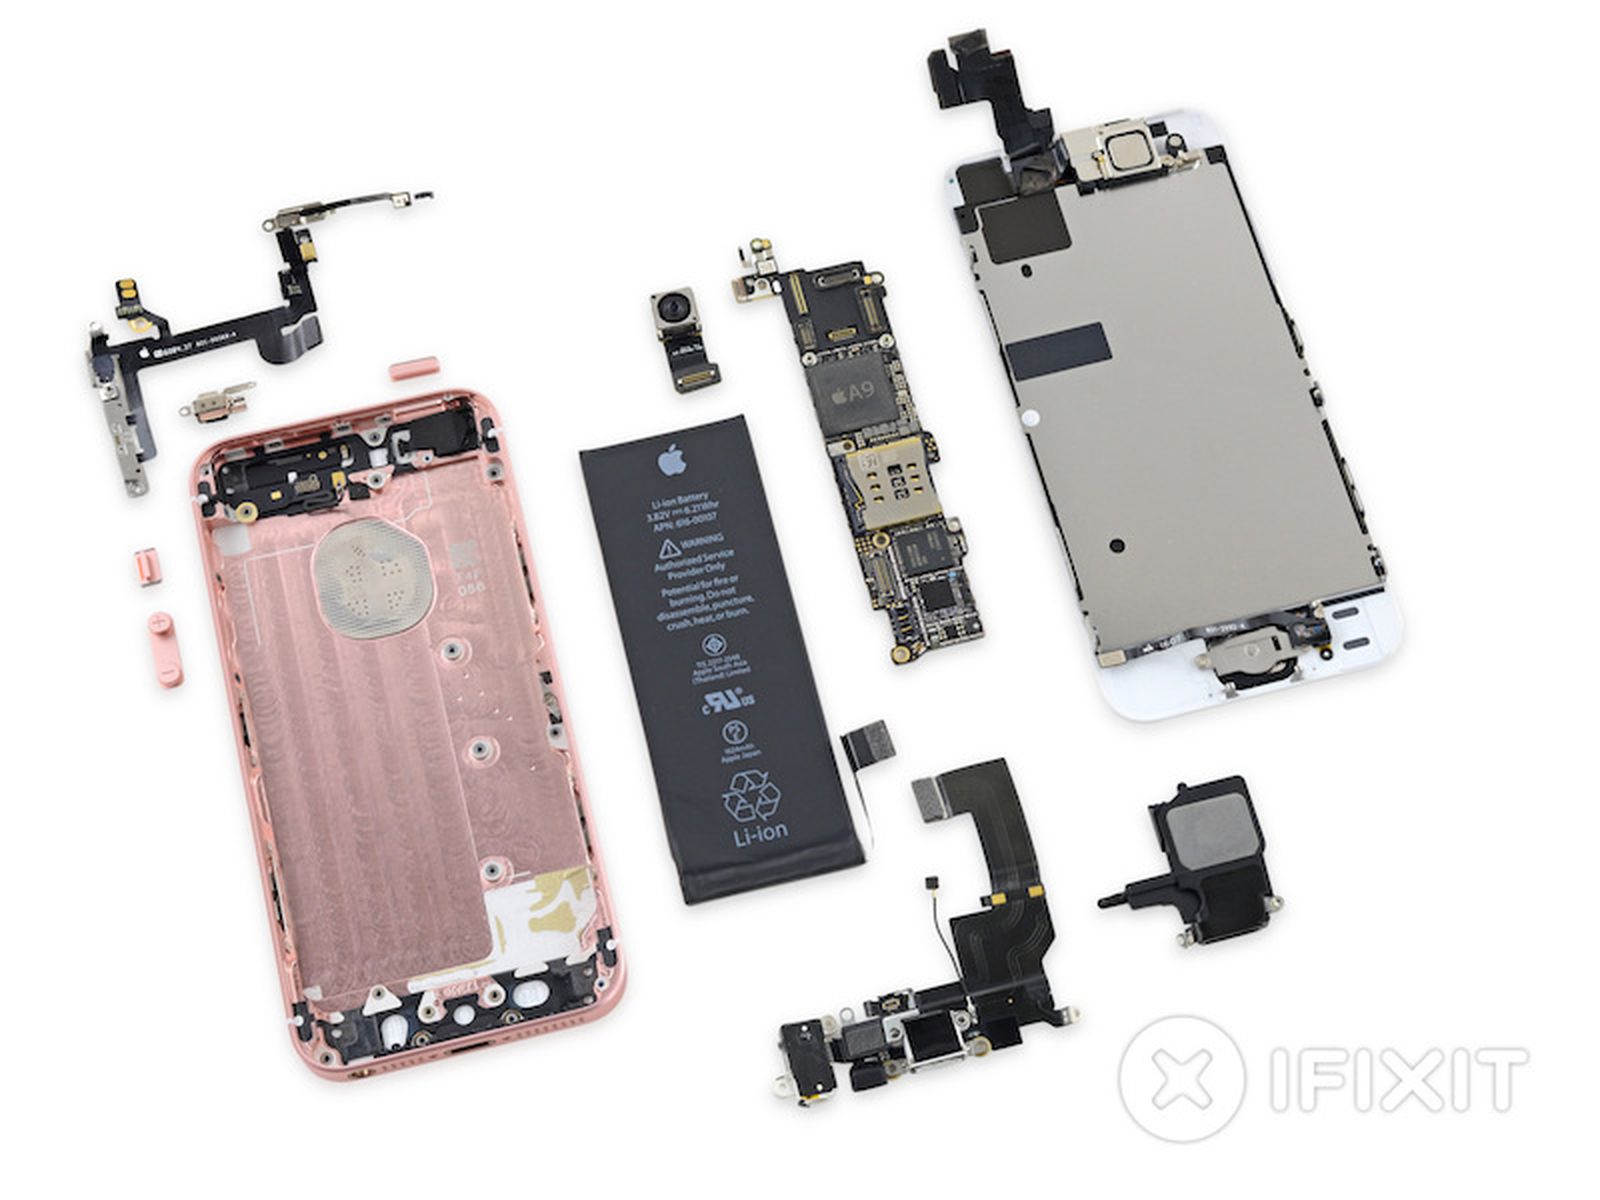 Teardown Finds iPhone SE and iPhone 5s Displays Interchangeable - MacRumors